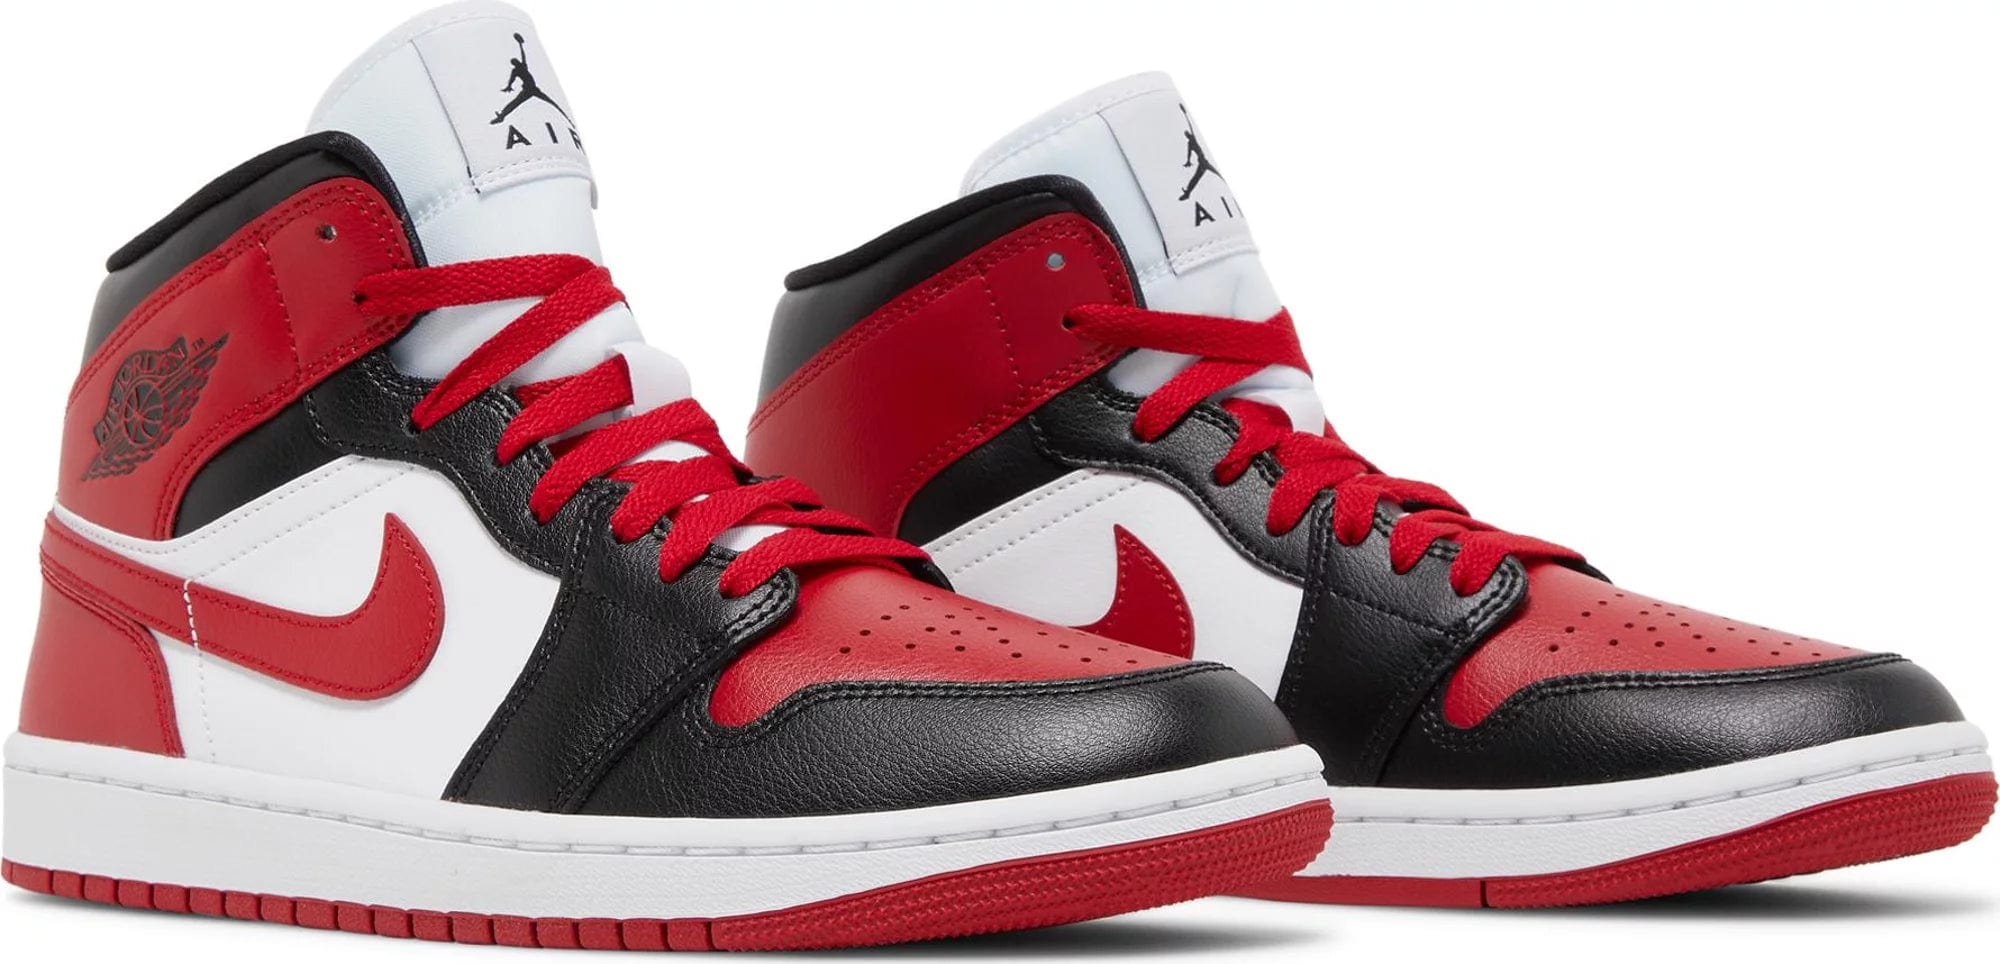 sneakers Nike Air Jordan 1 Mid Alternate Bred Toe Women's